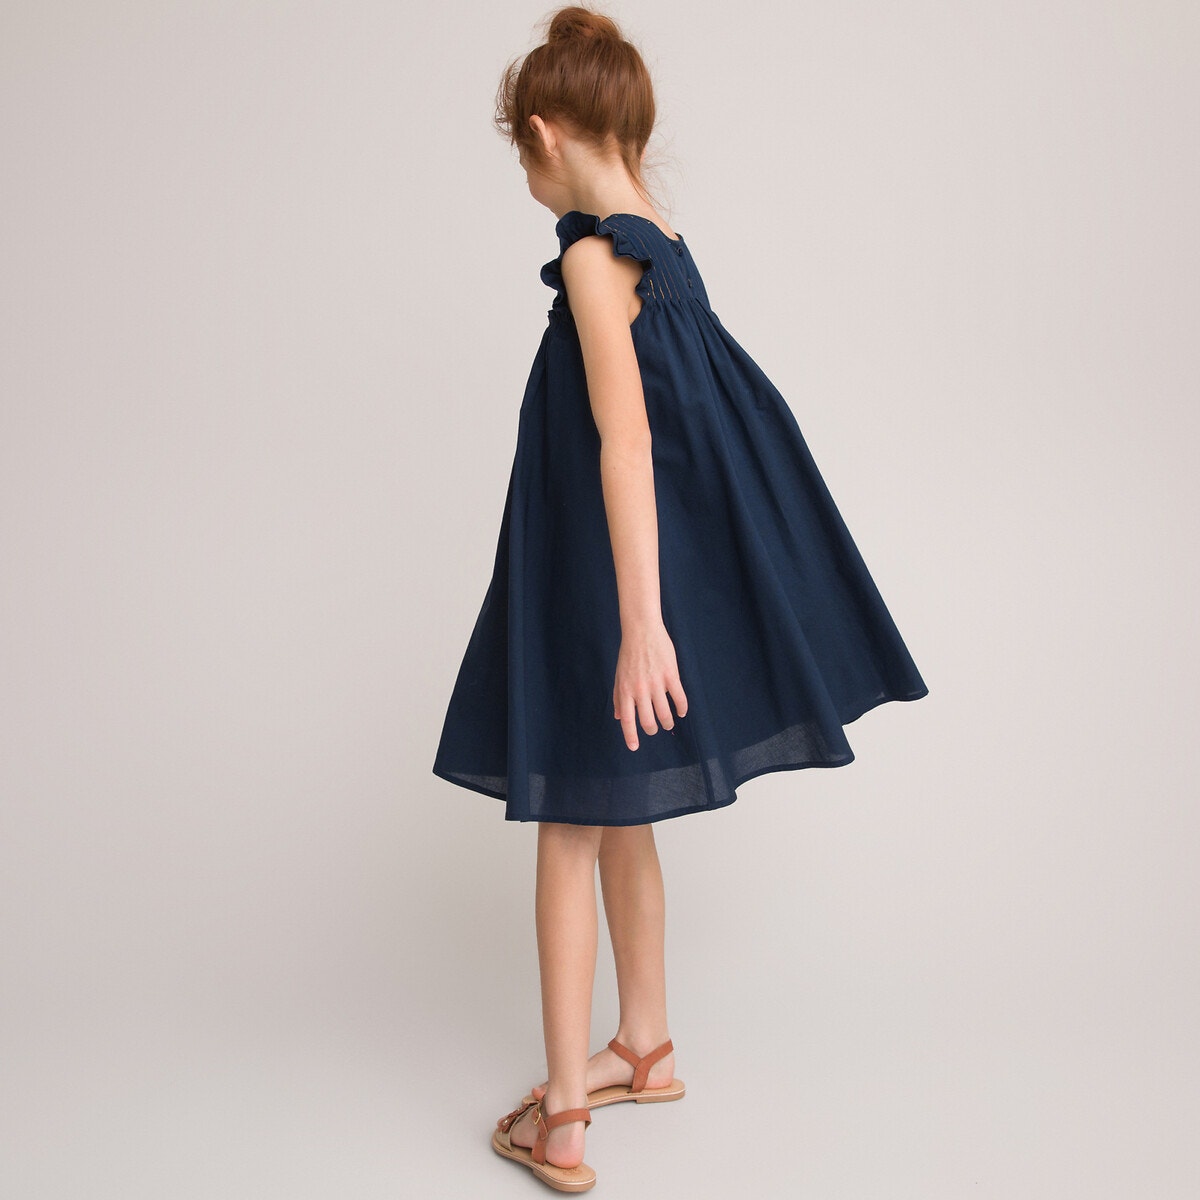 STAGING | ΠΑΙΔΙ | Φορέματα | Αμάνικα Αμάνικο φόρεμα από οργανικό βαμβάκι, 3-12 ετών